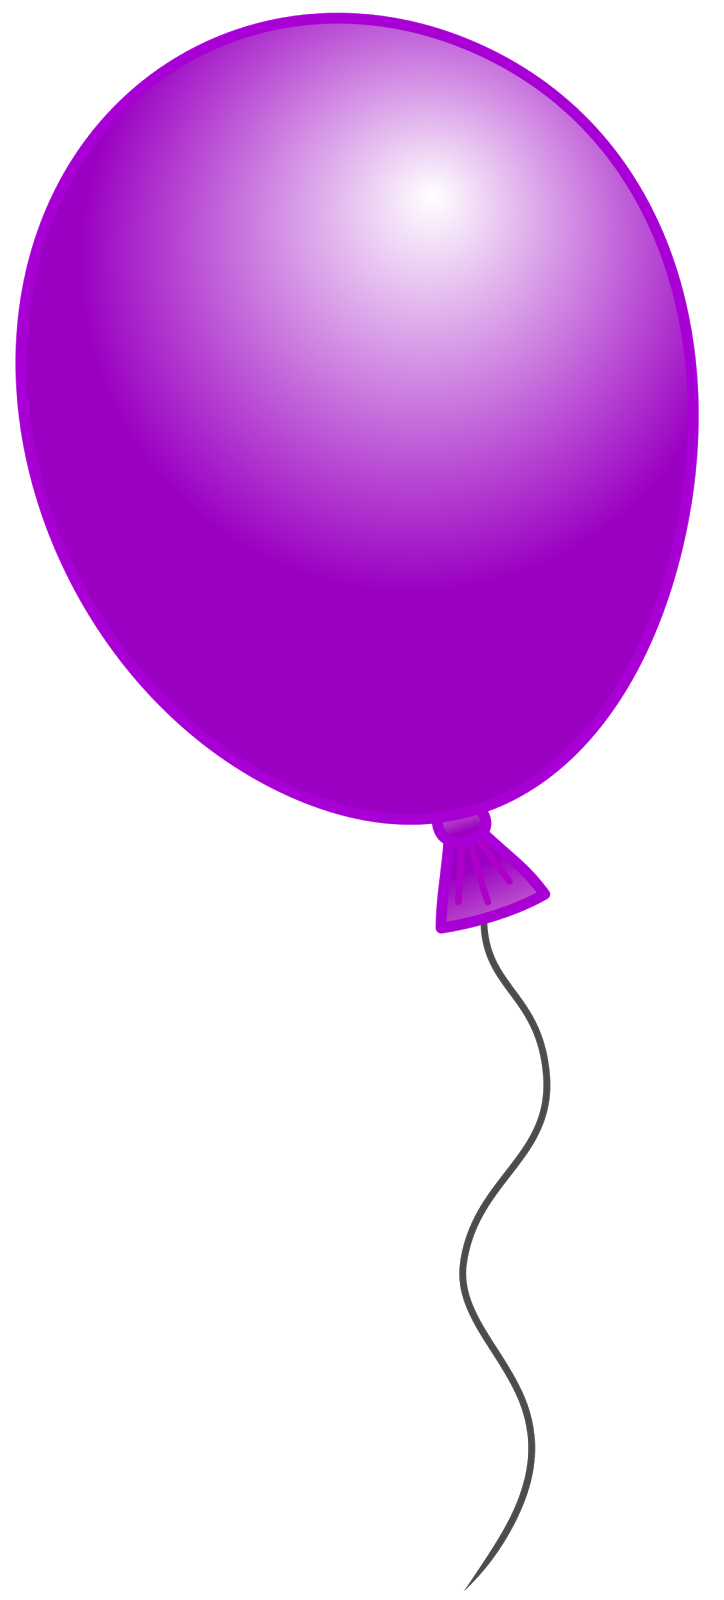 Single birthday balloons clipart